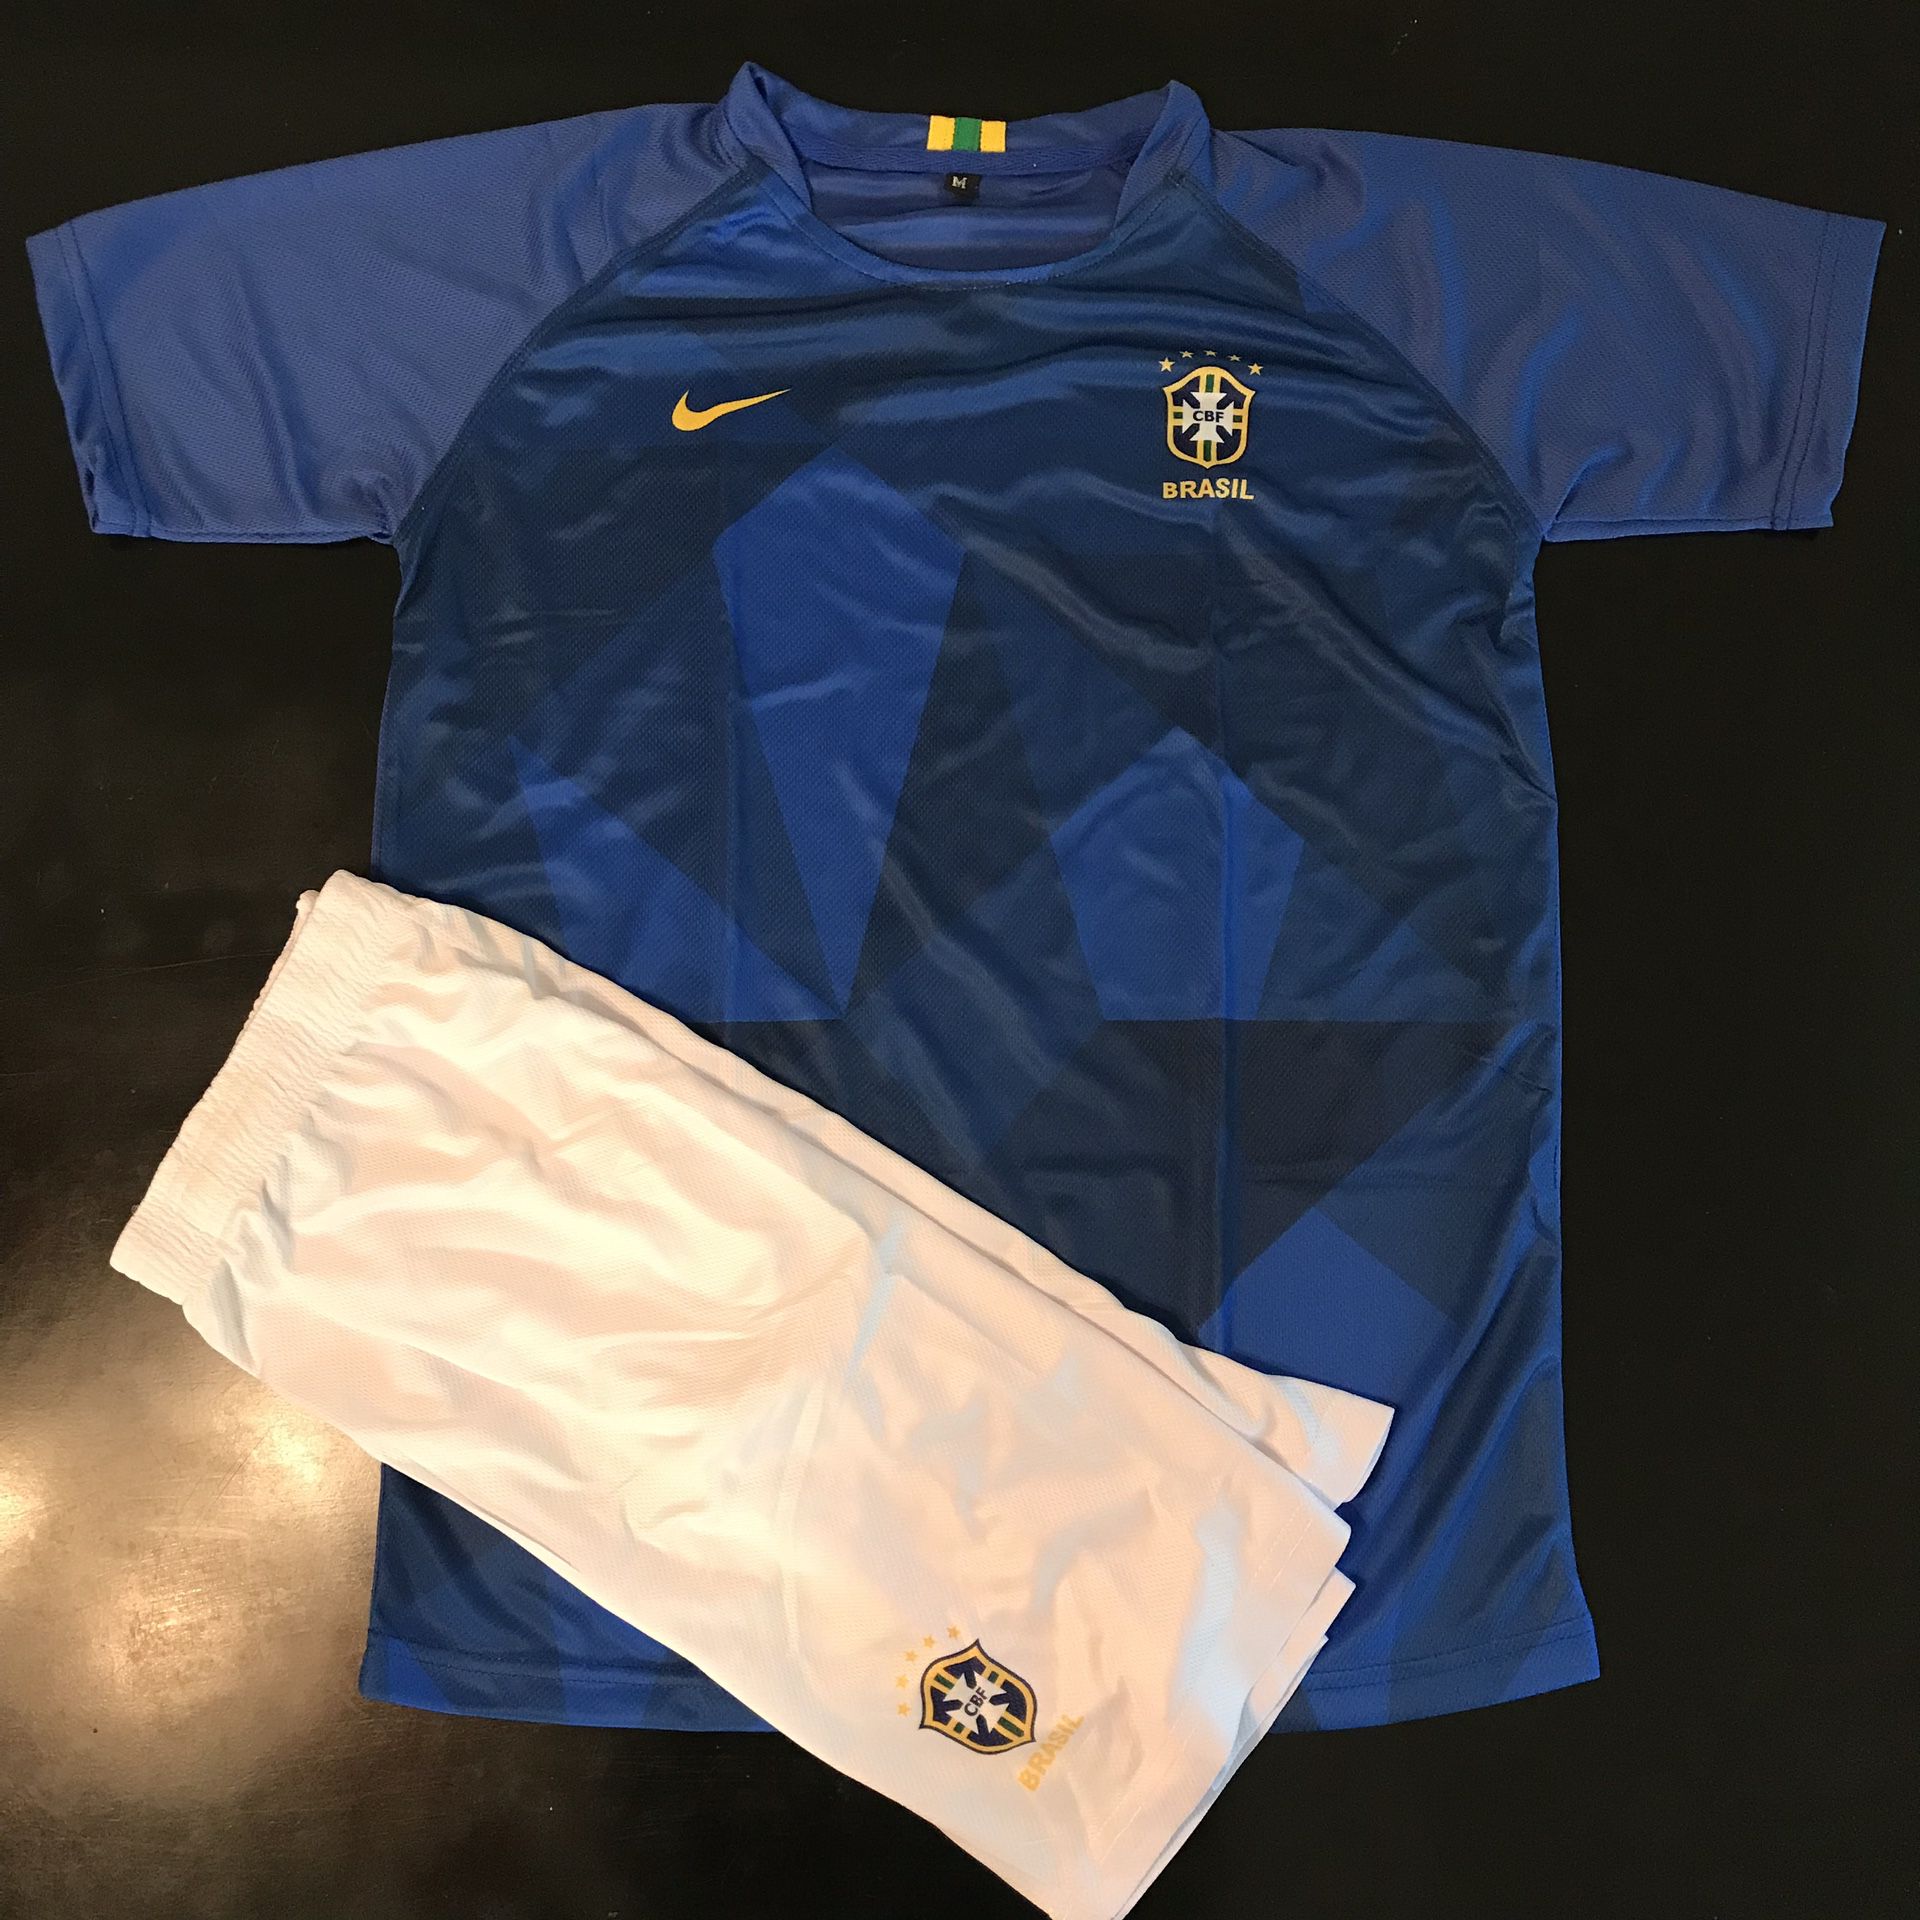 NEW! Brazil Jersey & shorts. All size MEDIUM.